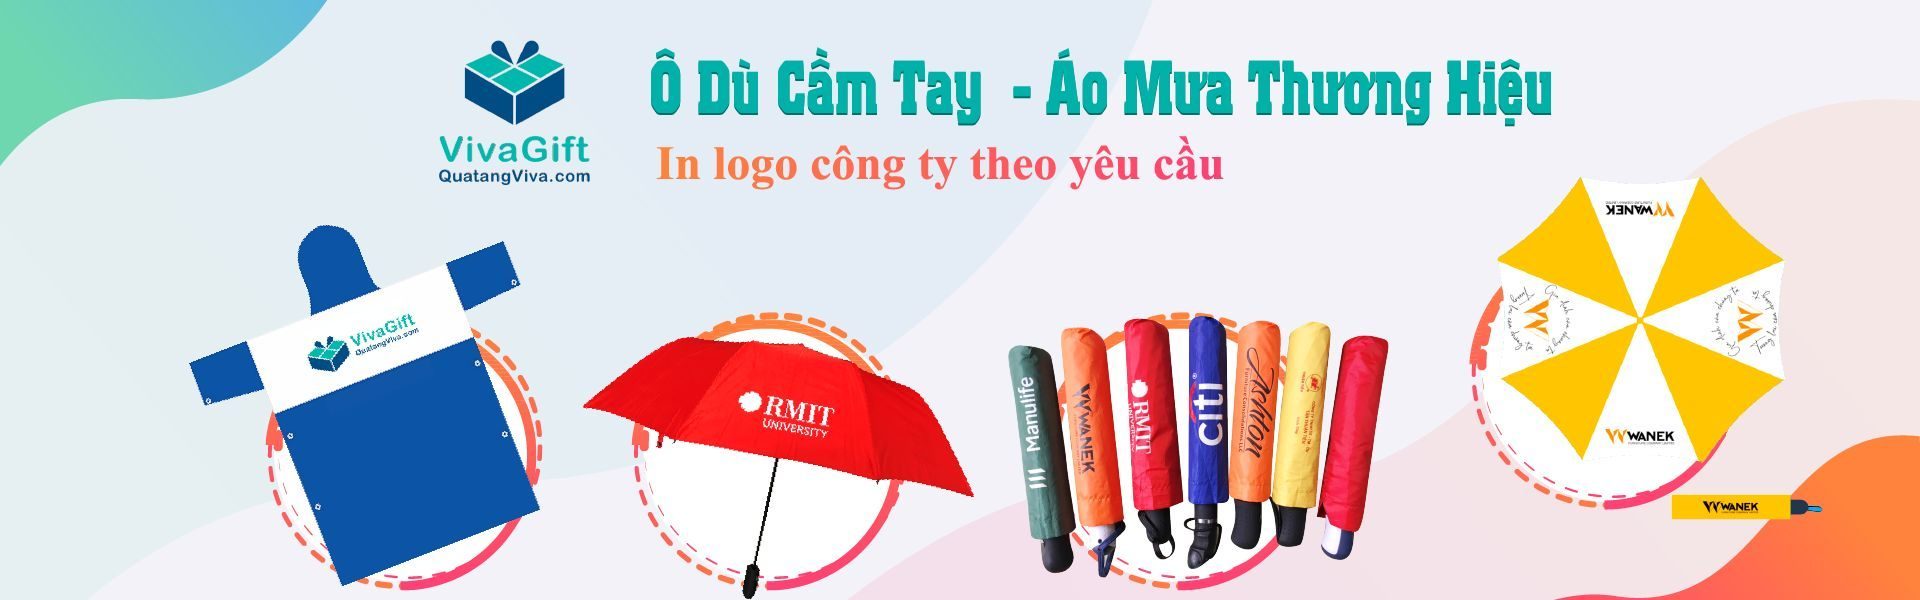 banner qua tang so tay in logo cong ty 9 VivaGift